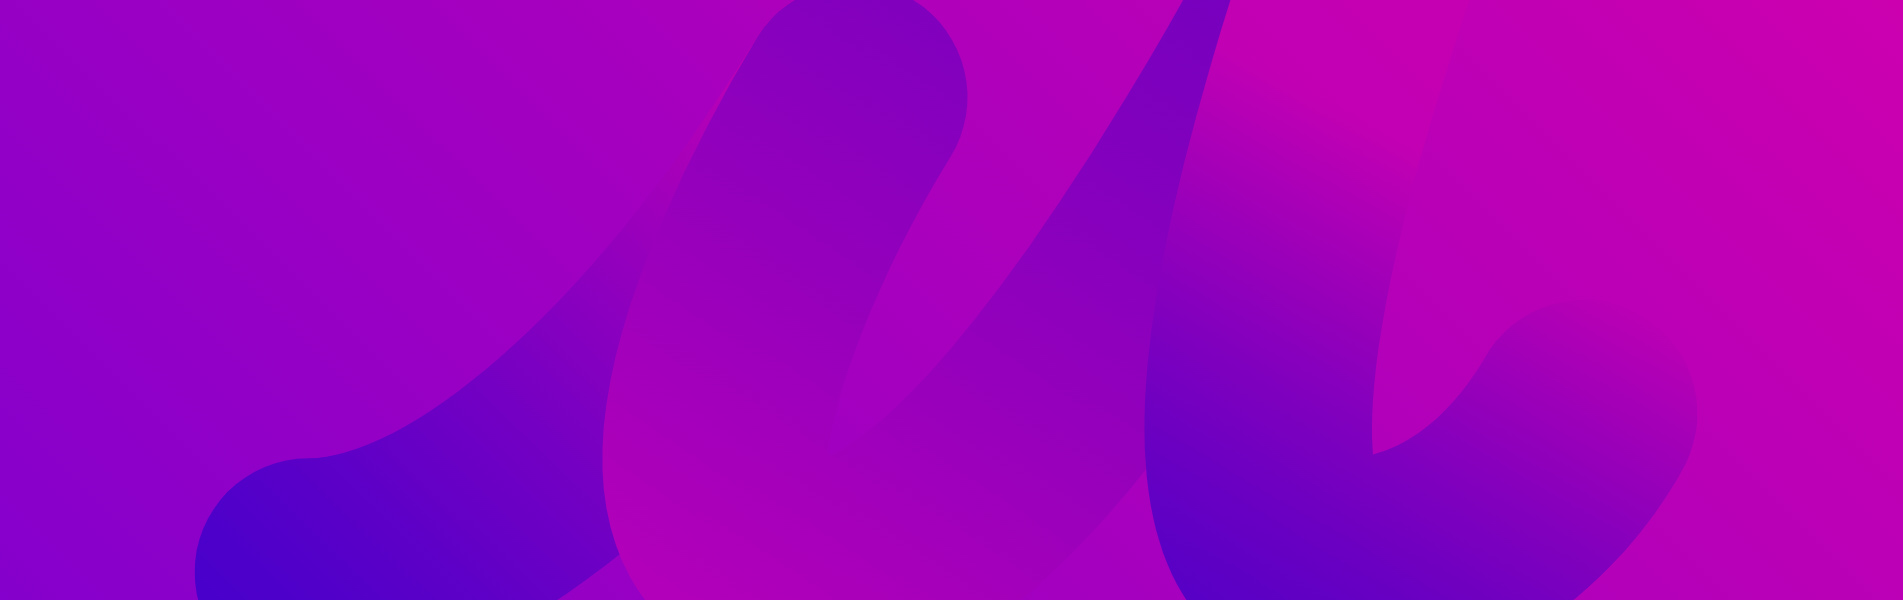 Mhance purple background